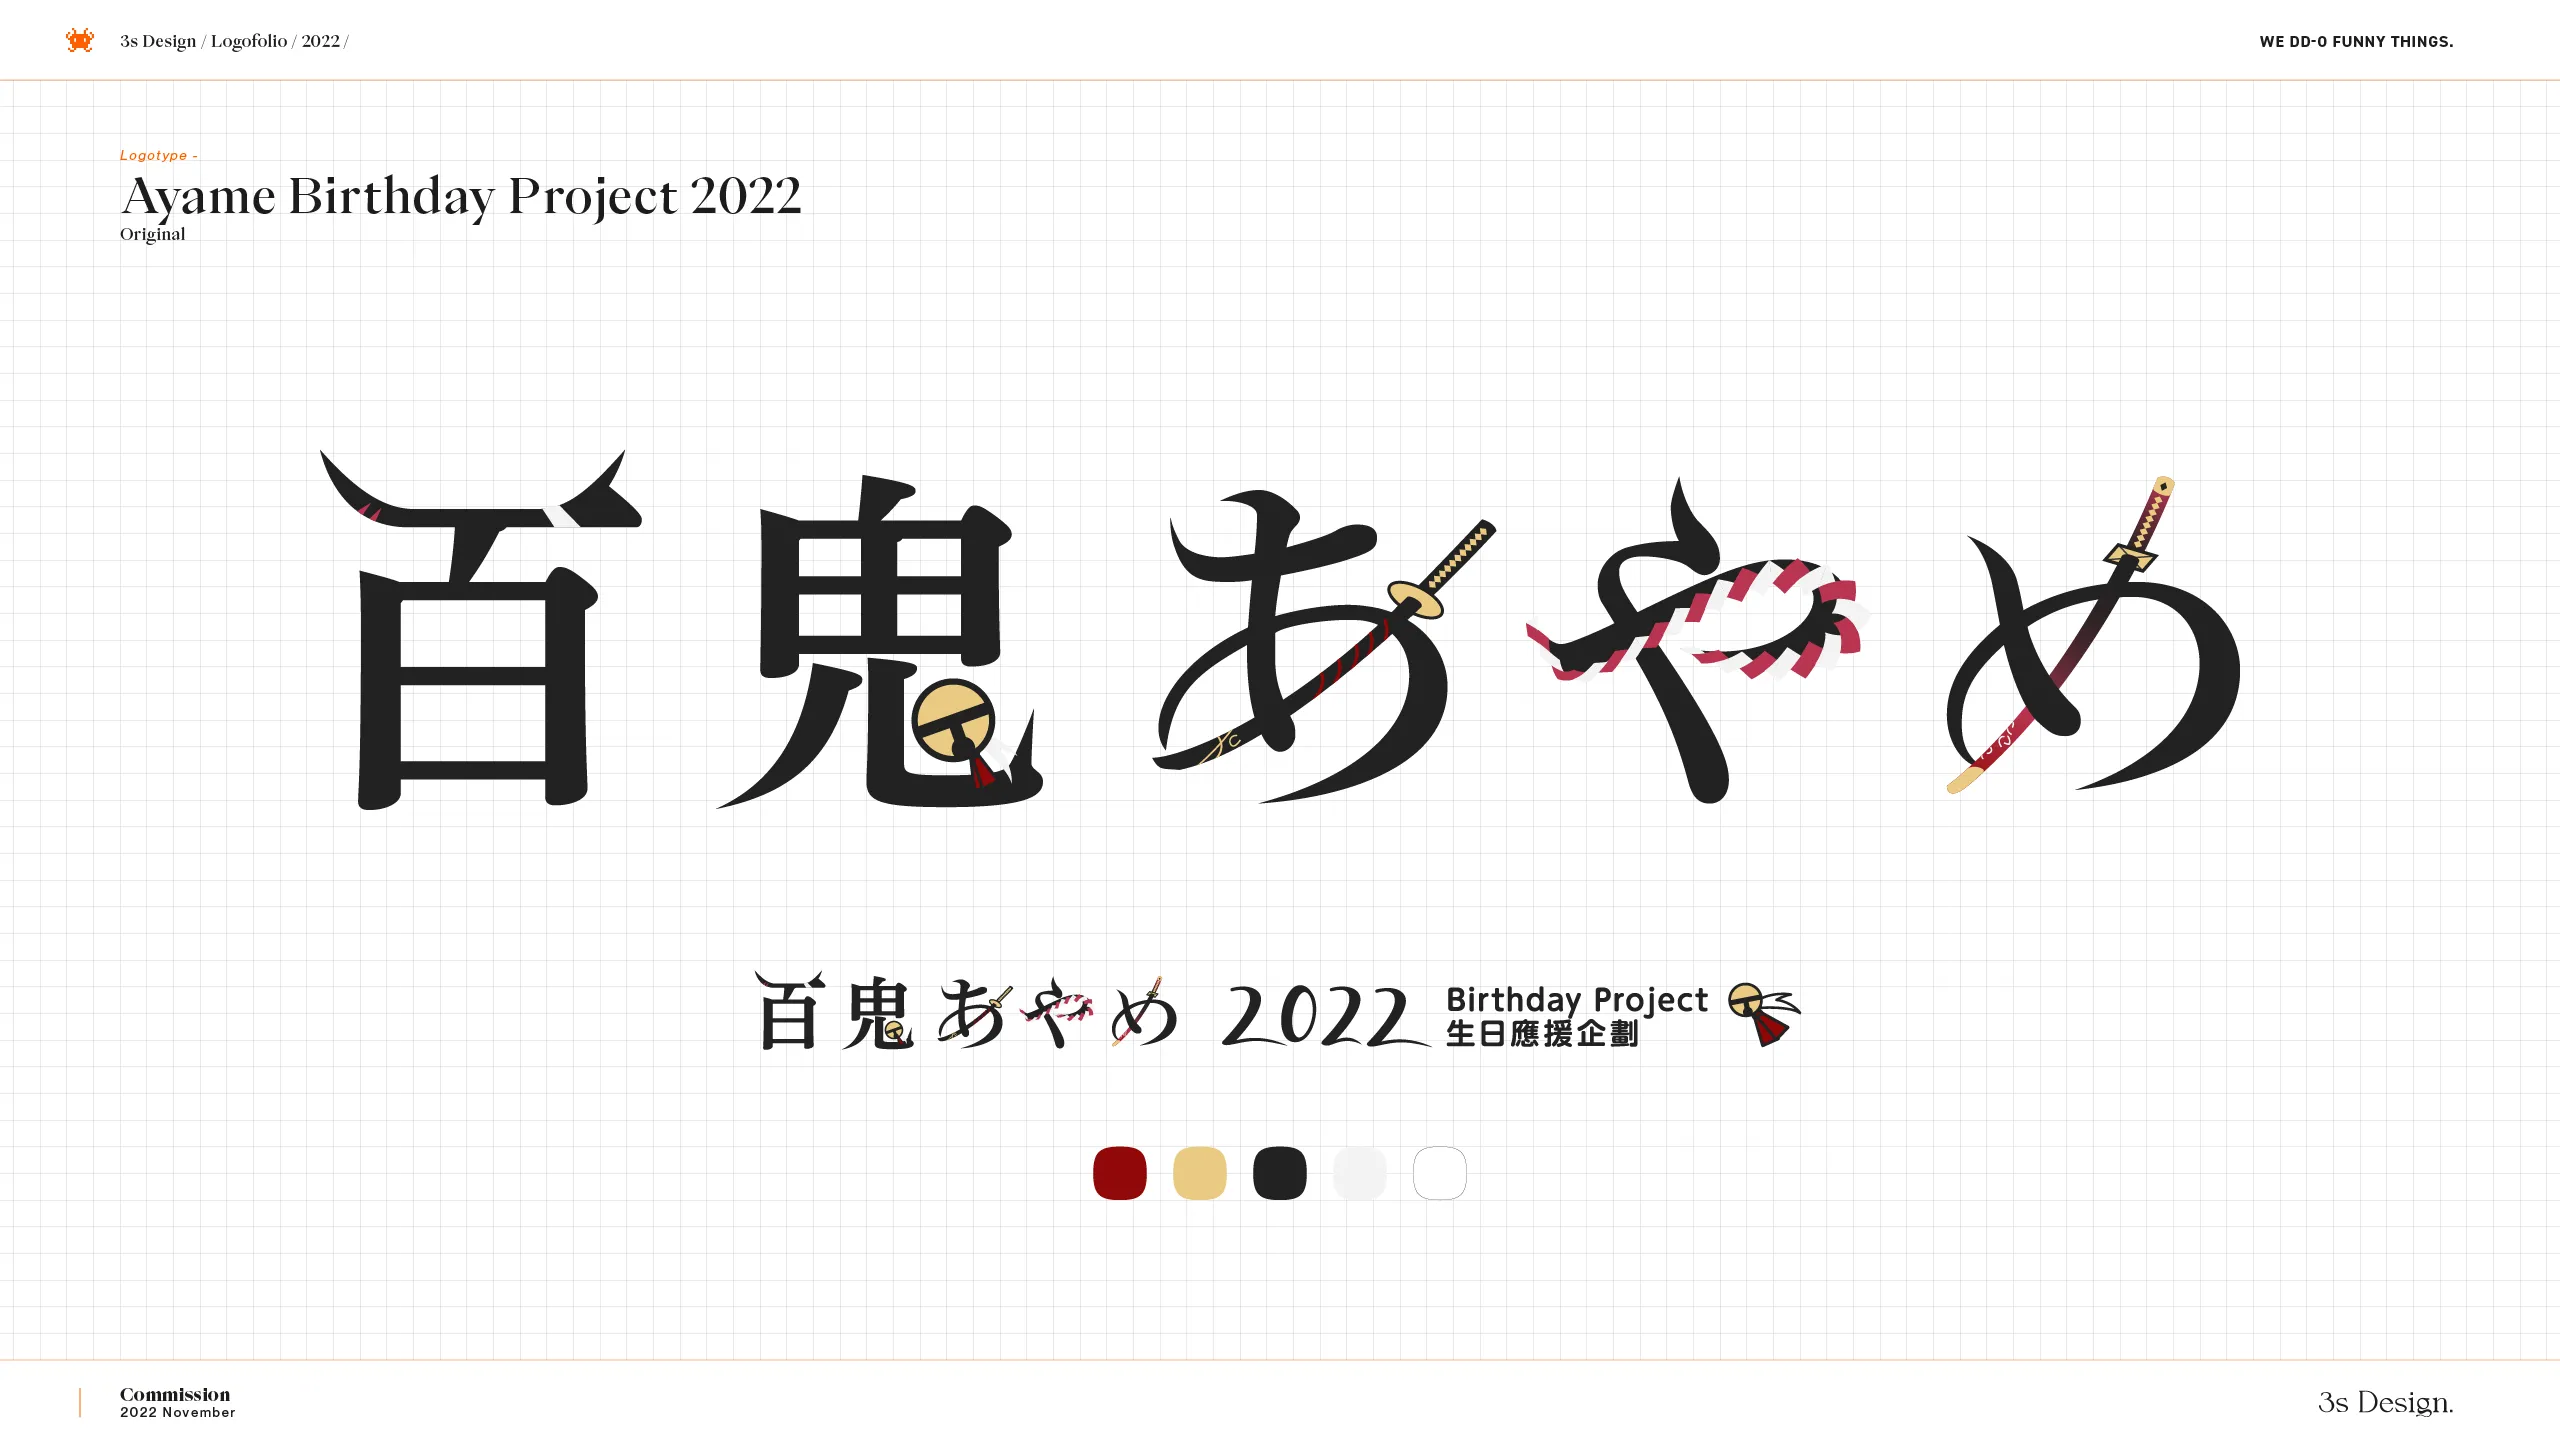 3s-Design-Logofolio-2022-v1.3_Ayame-Weak_2560x